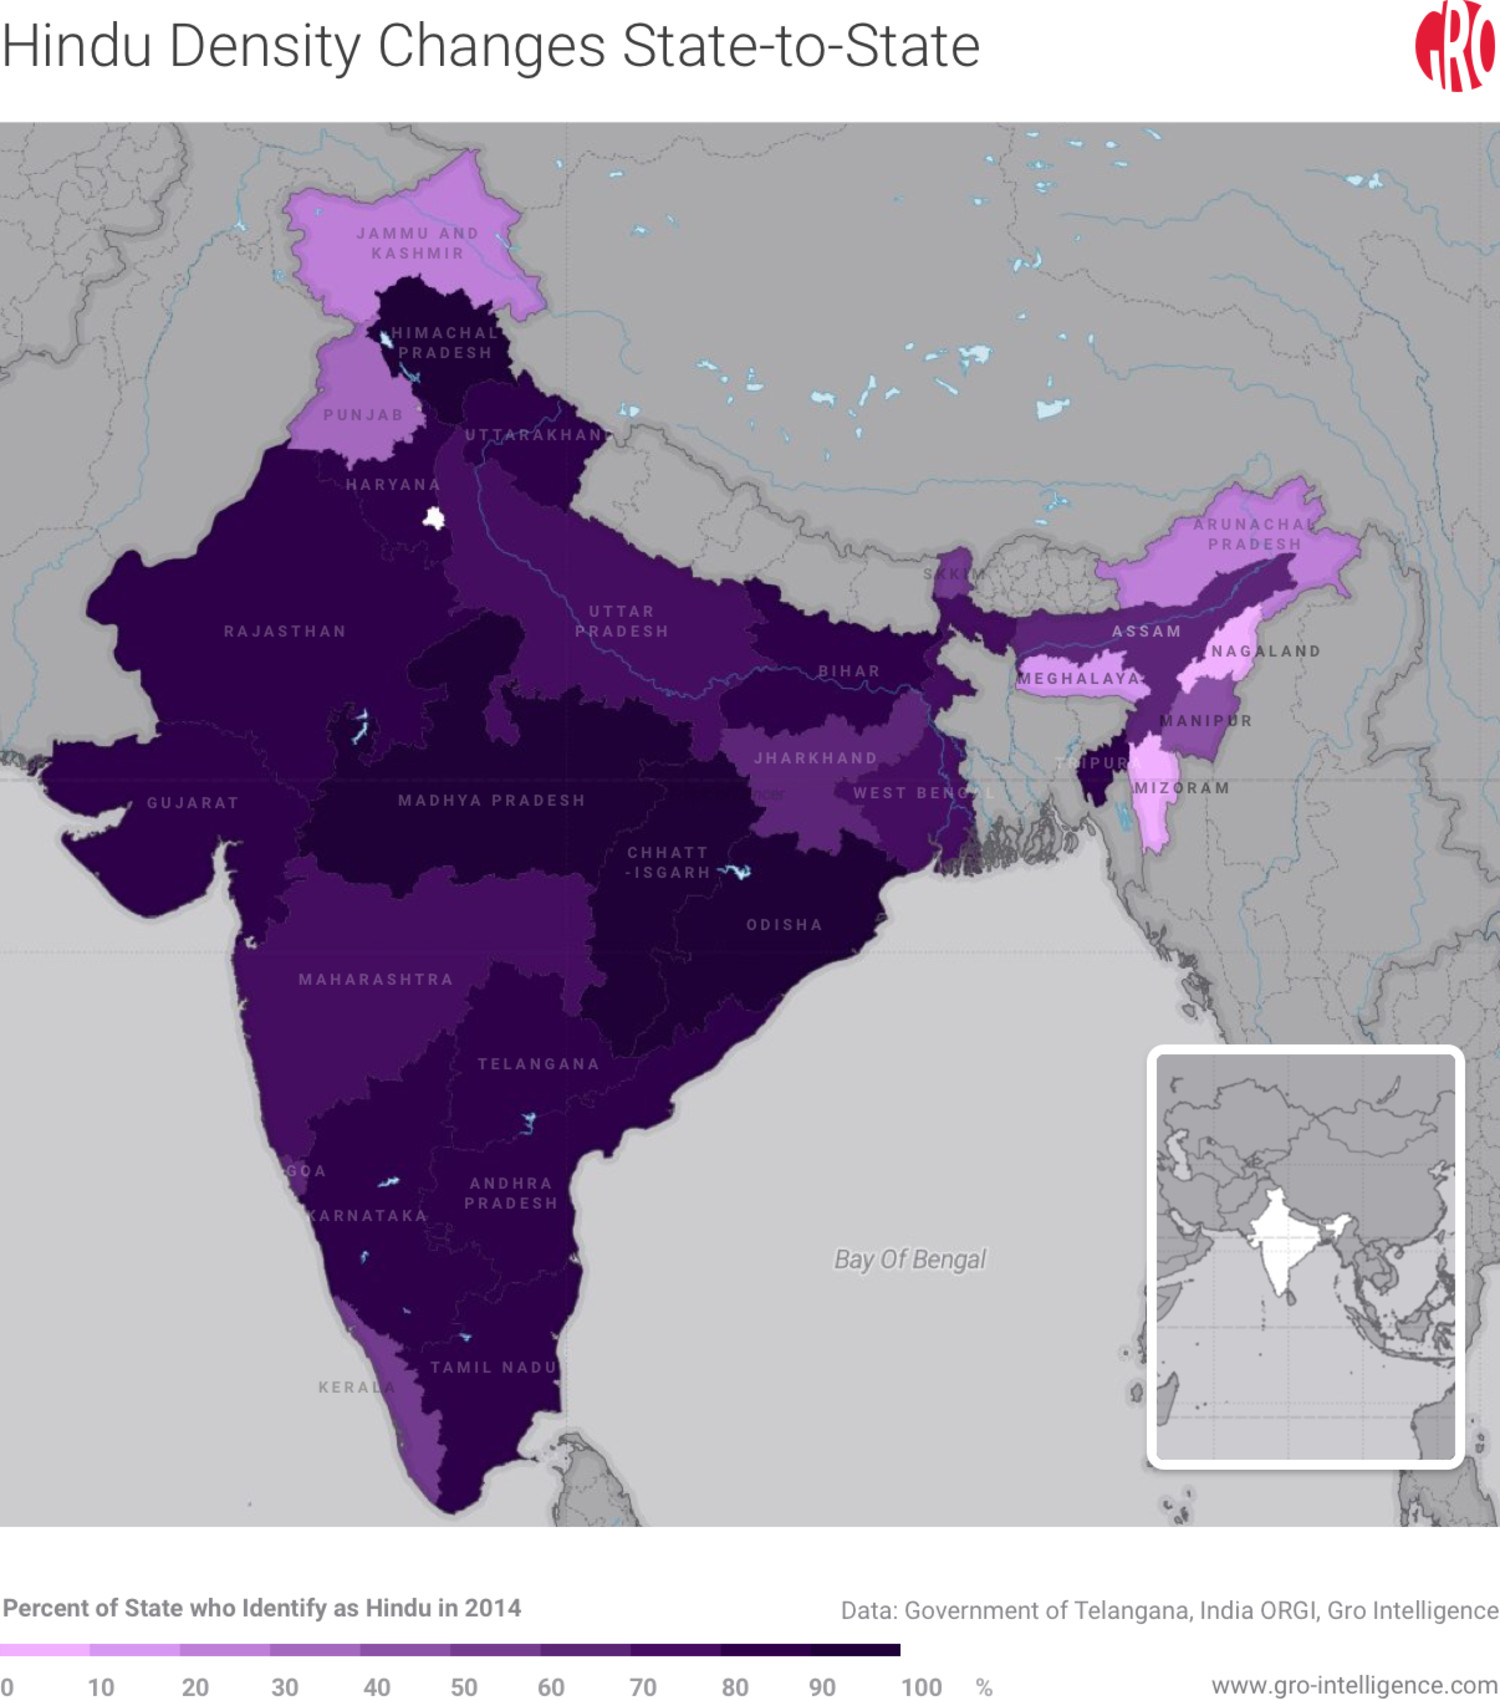 Hindu Percentage Across Indian States